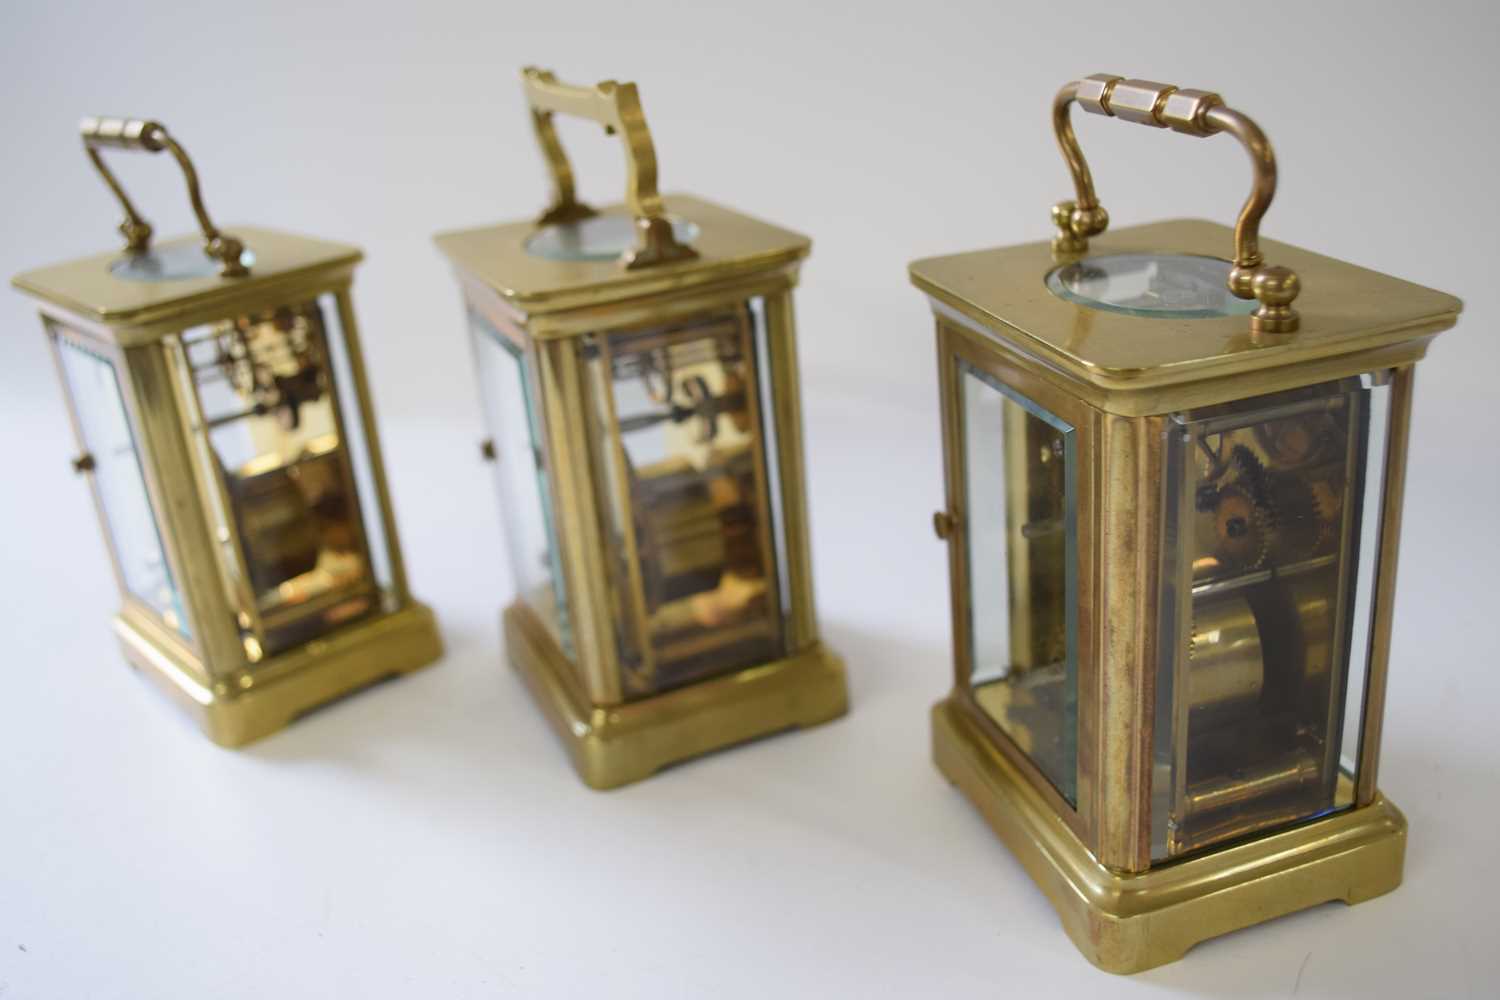 Three brass carriage clocks - Image 3 of 3